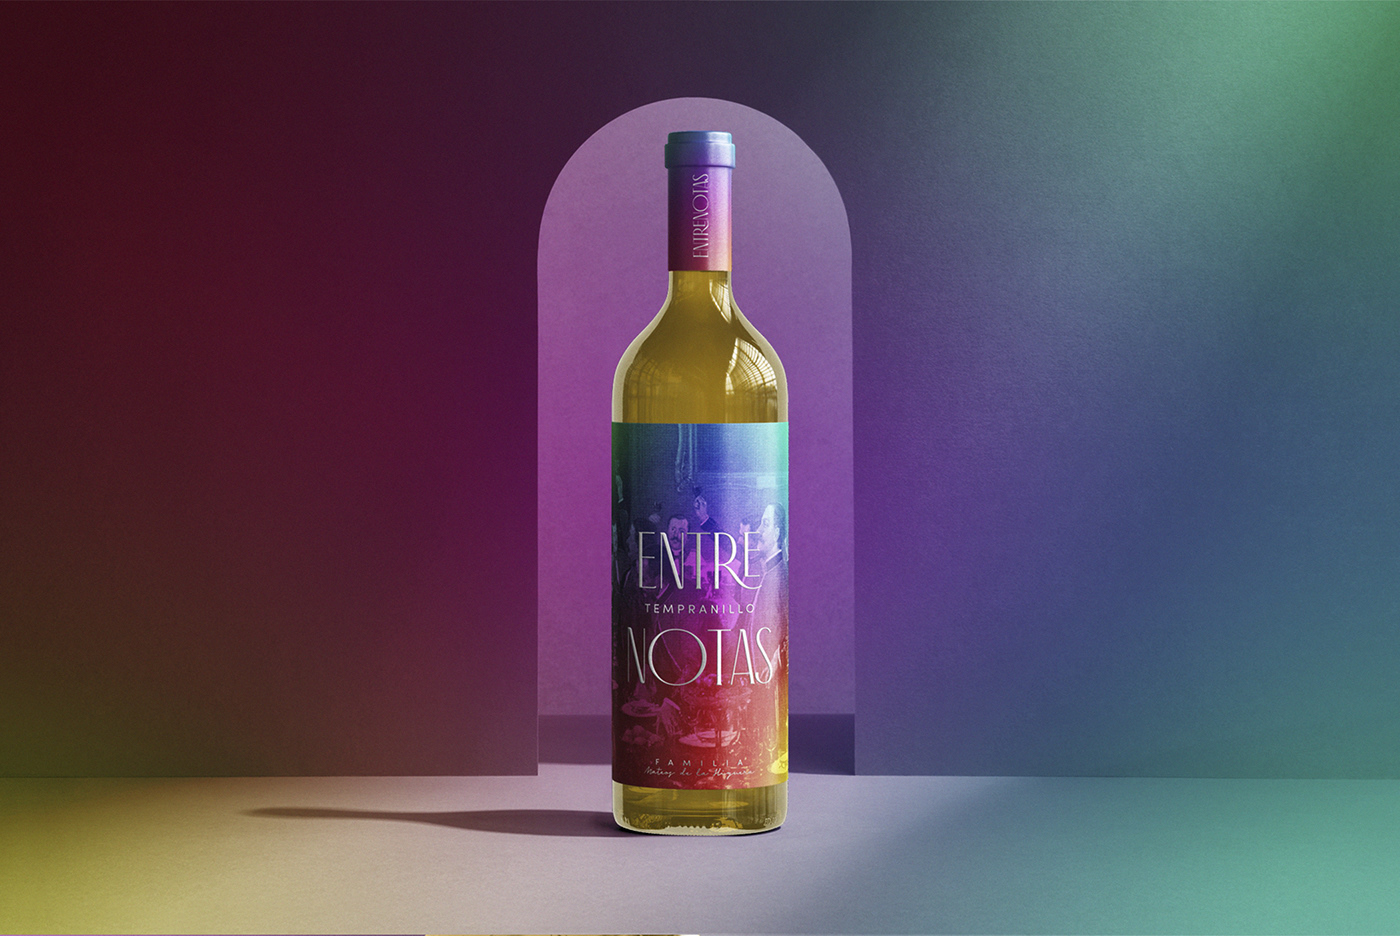 bottle embalaje entrenotas españa Label Packaging vega de mara vino visual identity wine